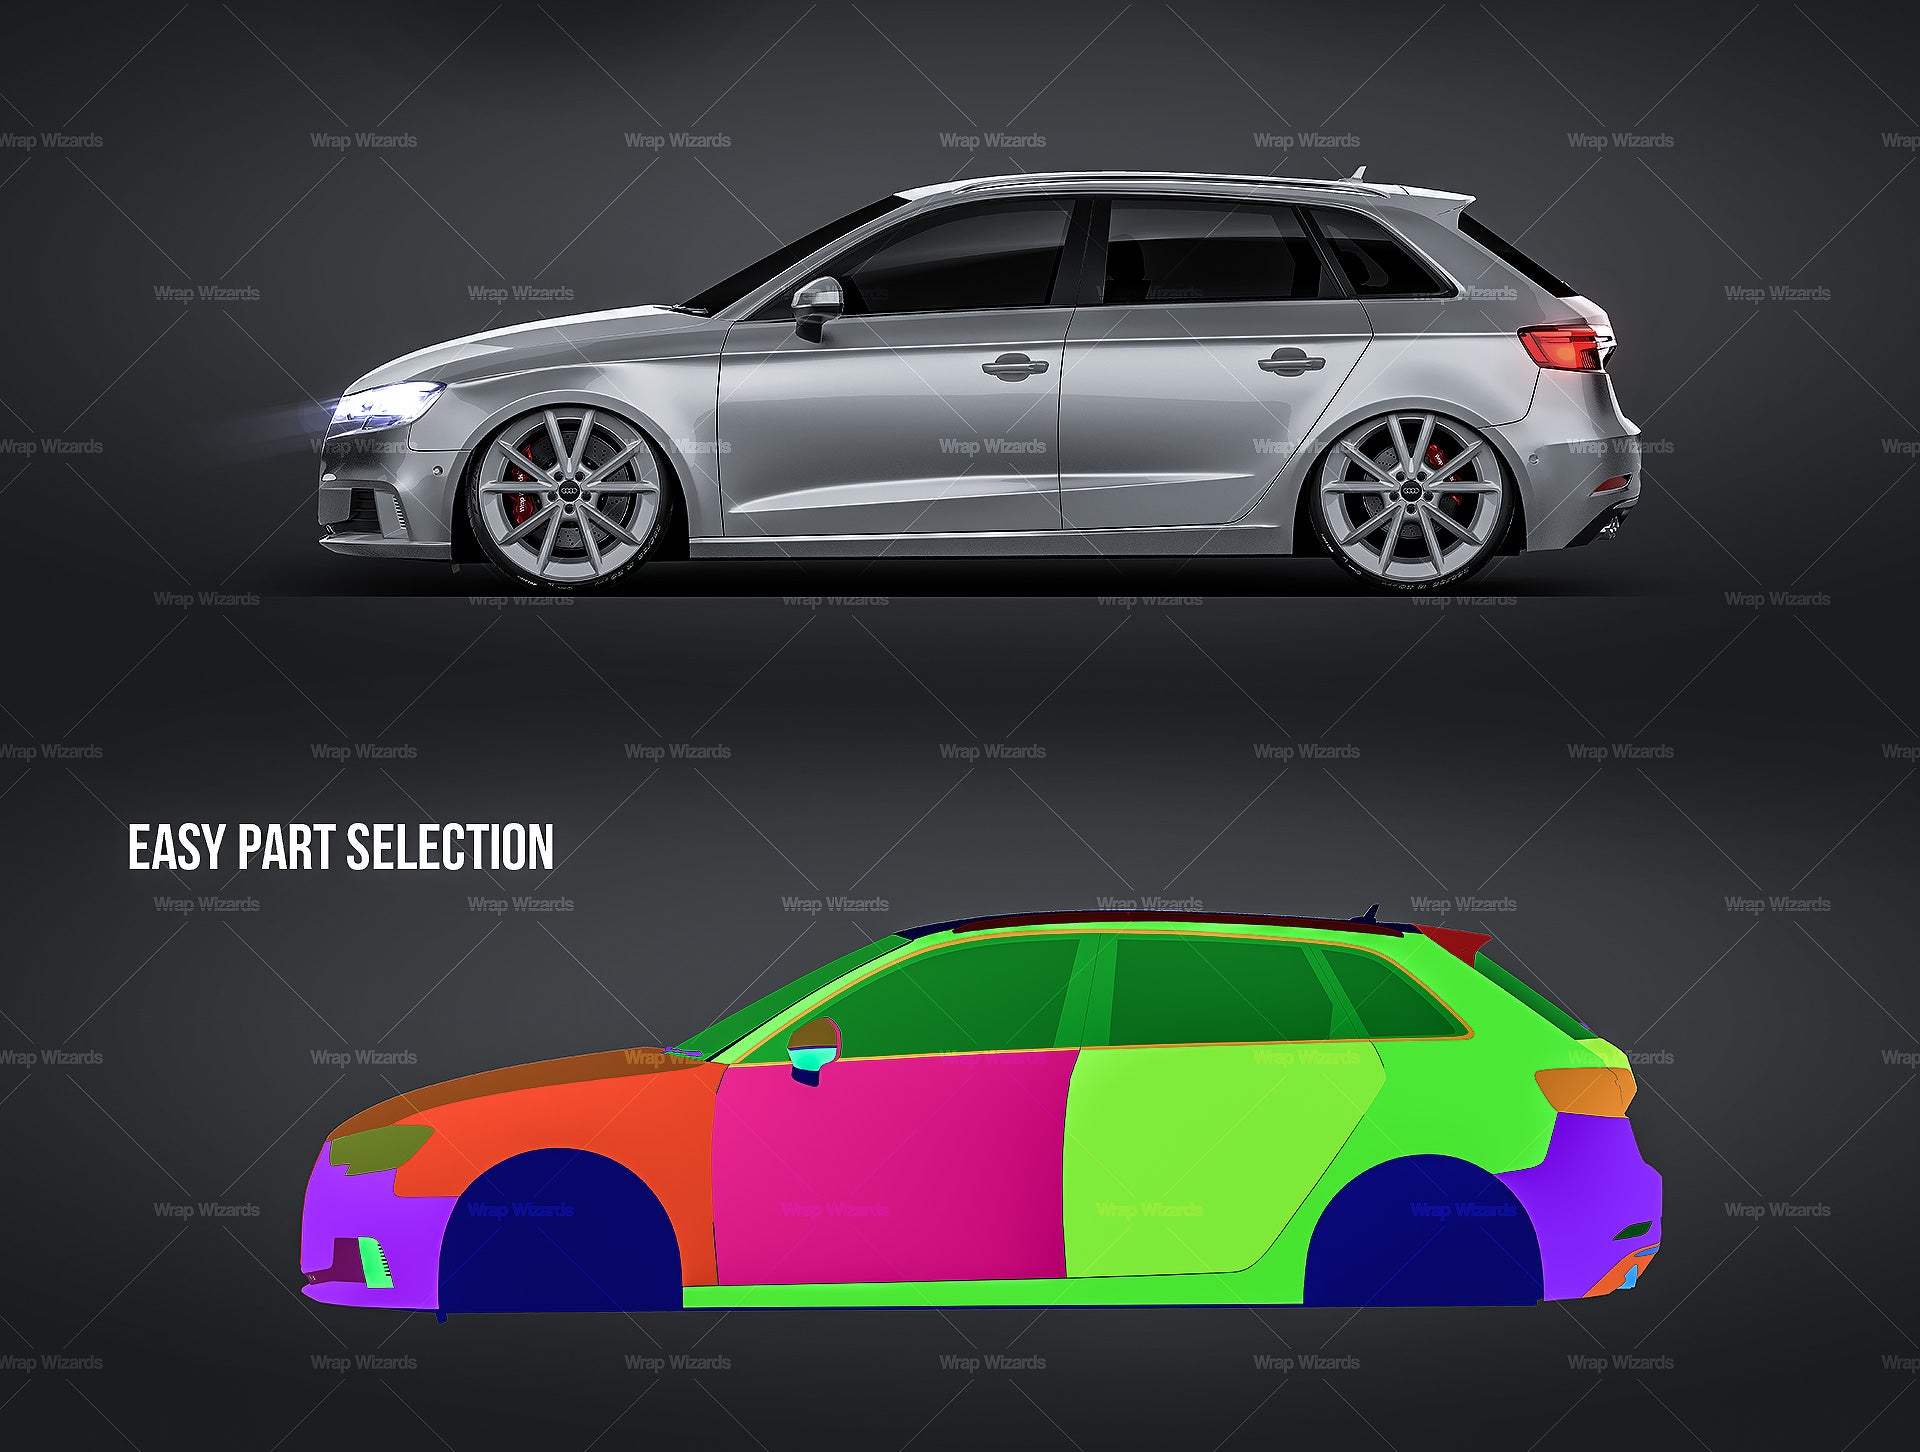 Audi A3 Sportback glossy finish - all sides Car Mockup Template.psd